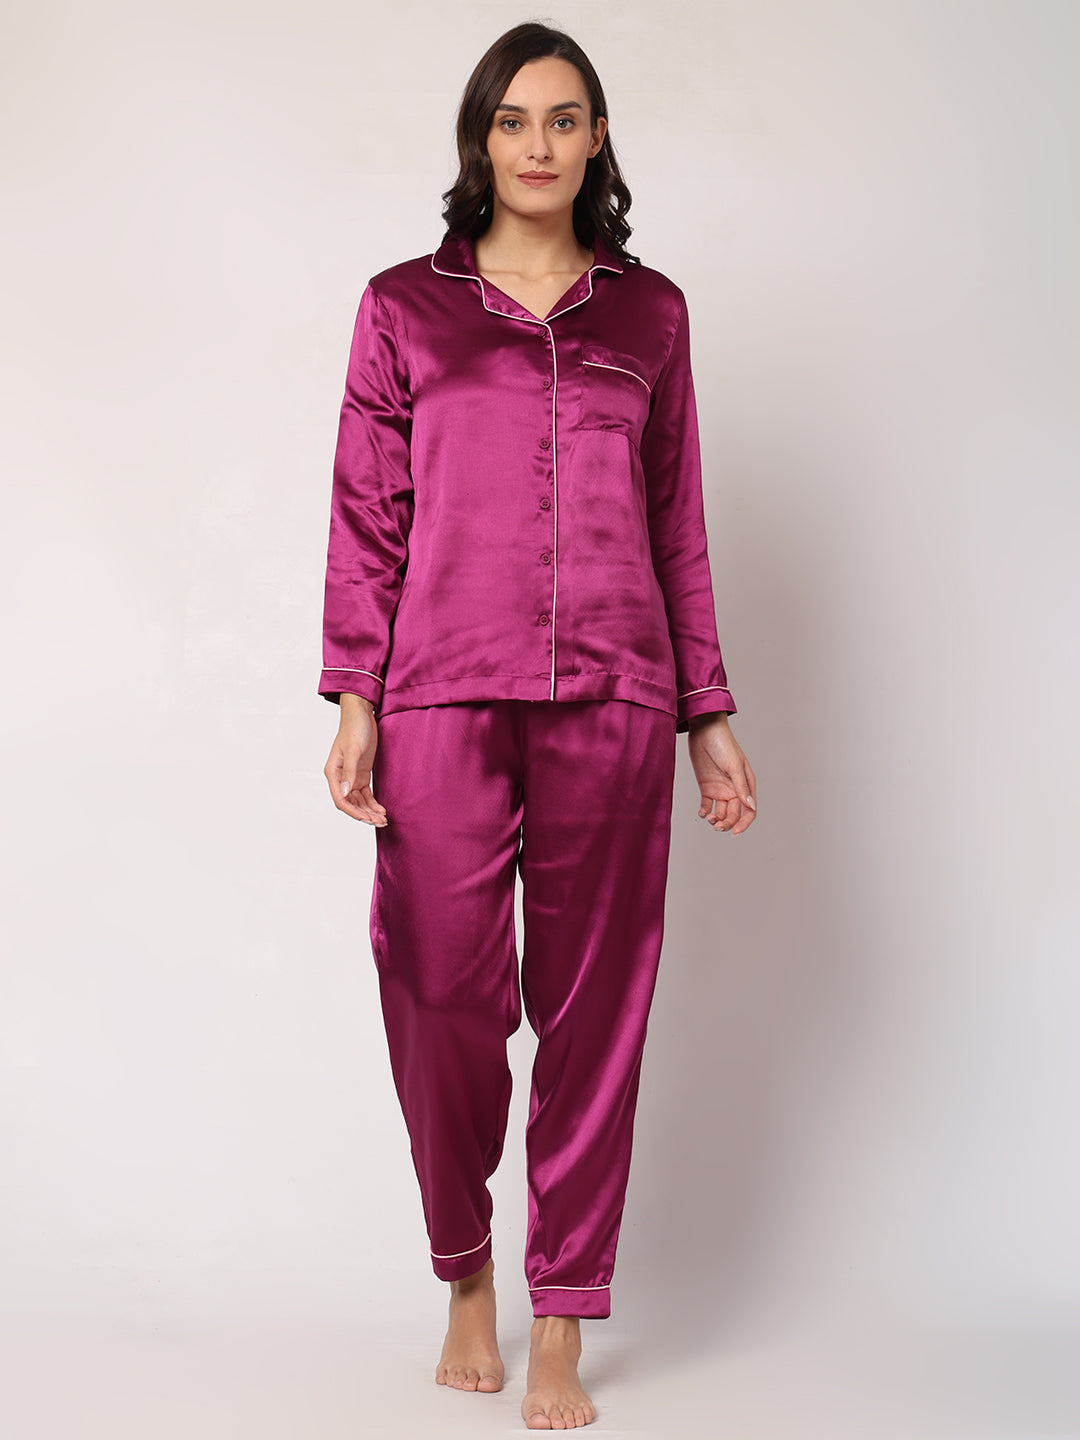 GOCHIKKO Women's Satin Plain Color Night Suit Set of Shirt & Pyjama Pack of 1(PURPLE)